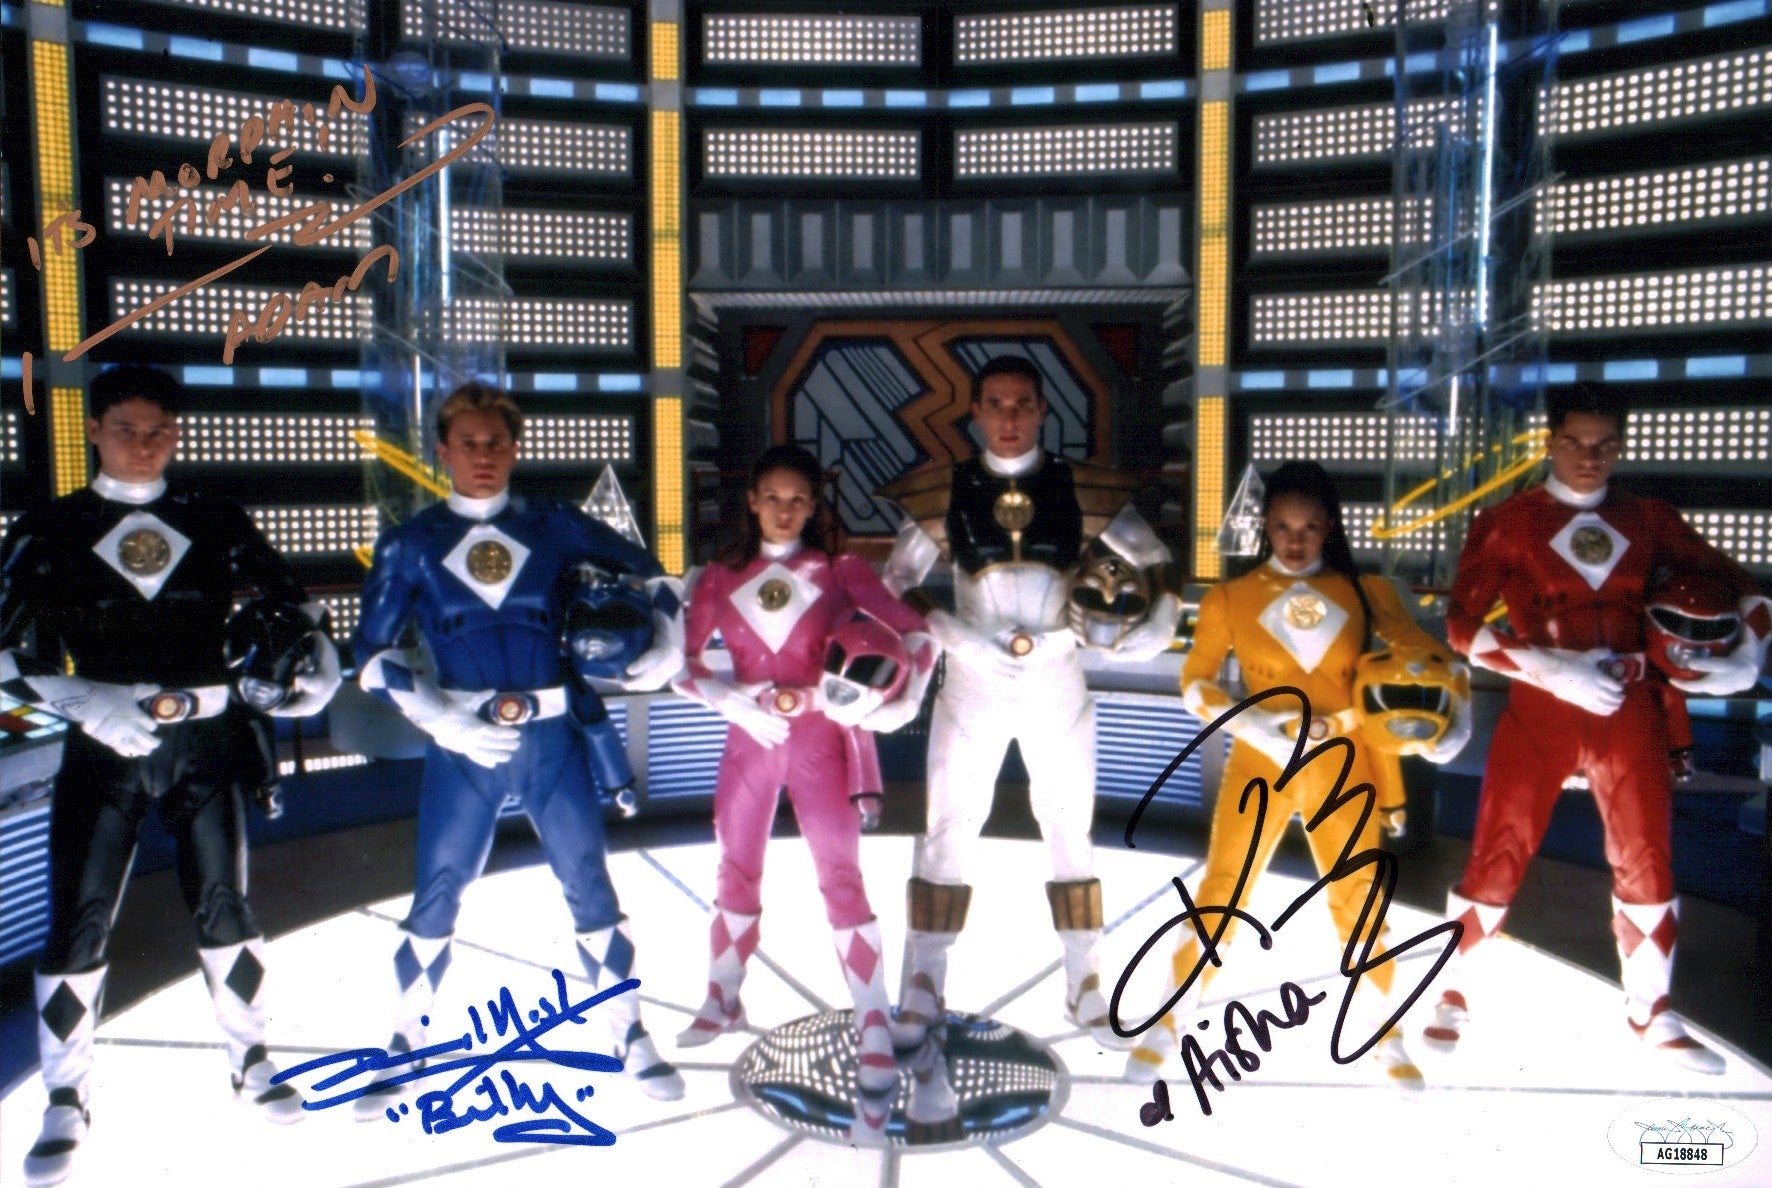 Mighty Morphin Power Rangers 8x12 Signed Photo Cast x3 Ashley, Bosch, Yost JSA Certified Autograph